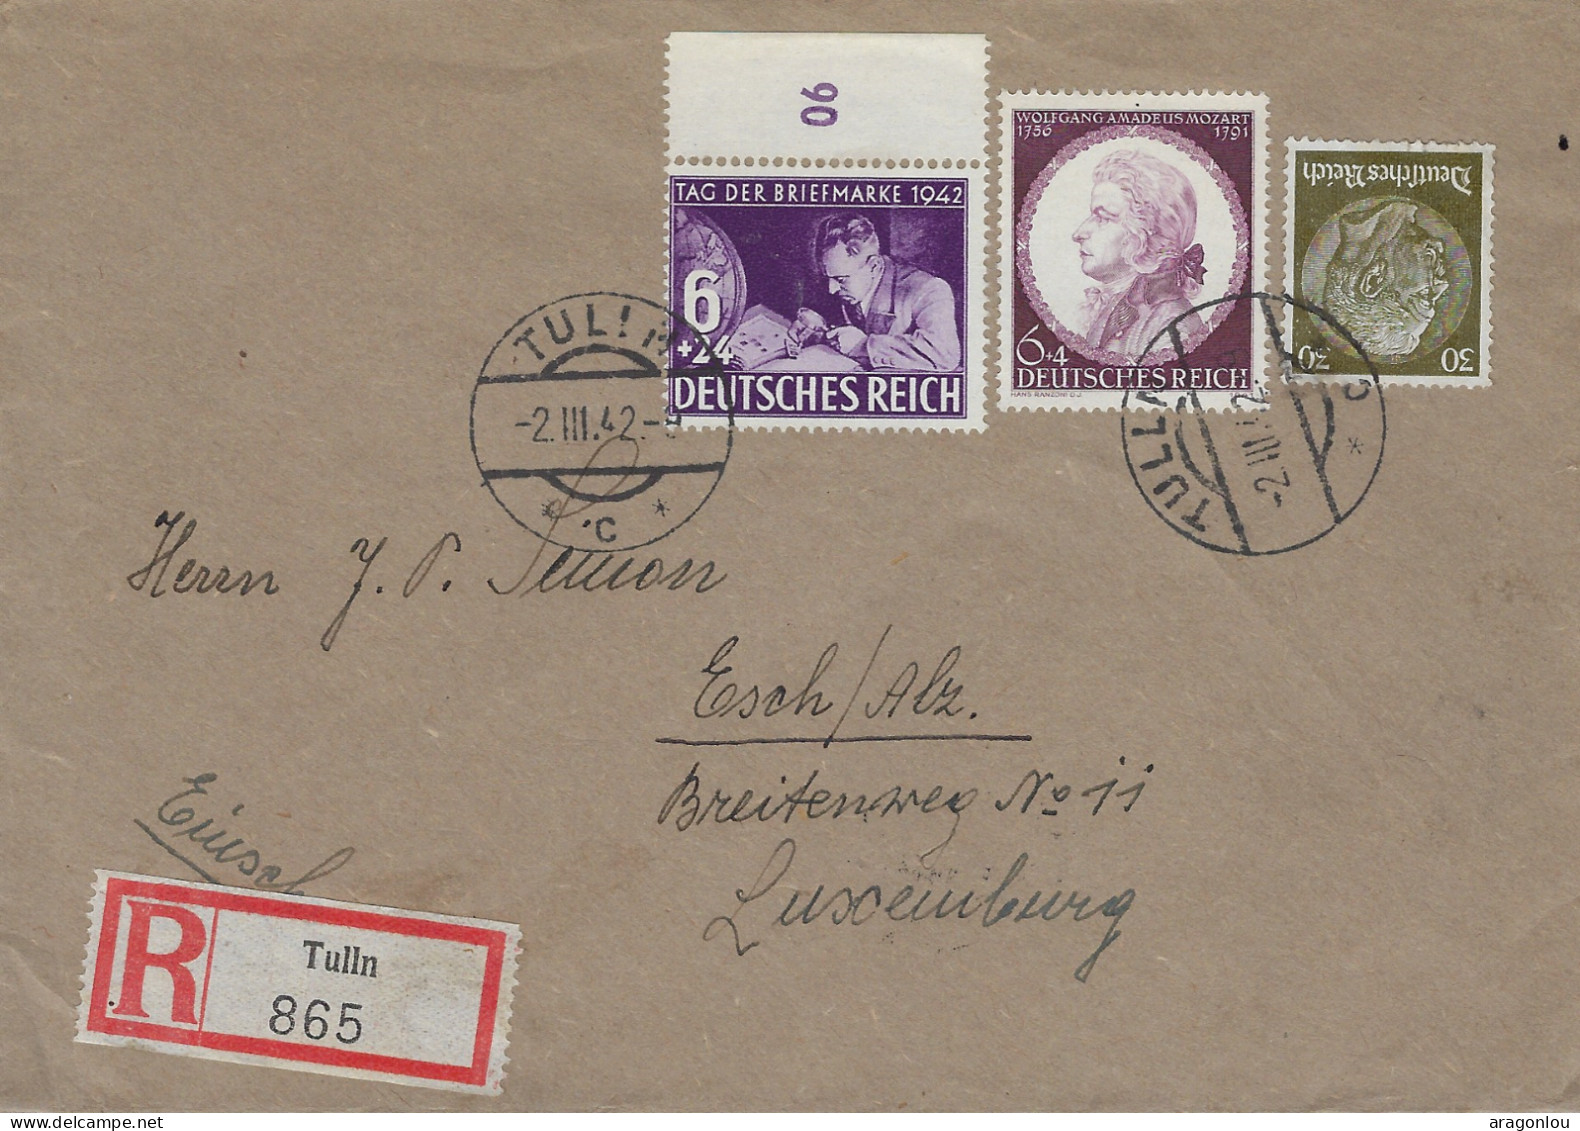 Luxembourg - Luxemburg - Lettre   Recommandé  1942   Occupation - Adressiert An J.P. Simon , Esch / Alzette - 1940-1944 Occupation Allemande